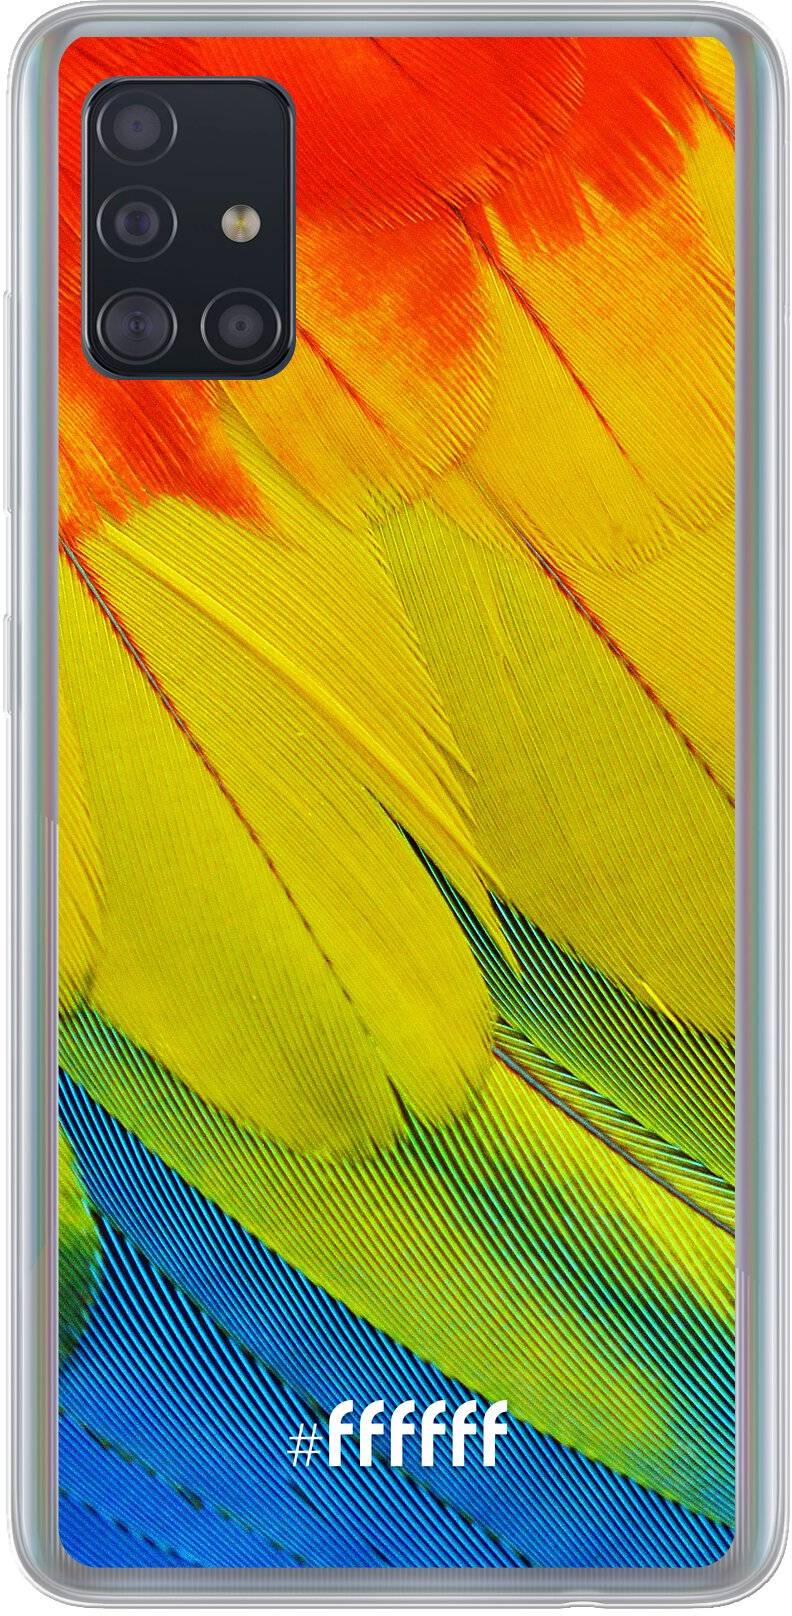 Macaw Hues Galaxy A51